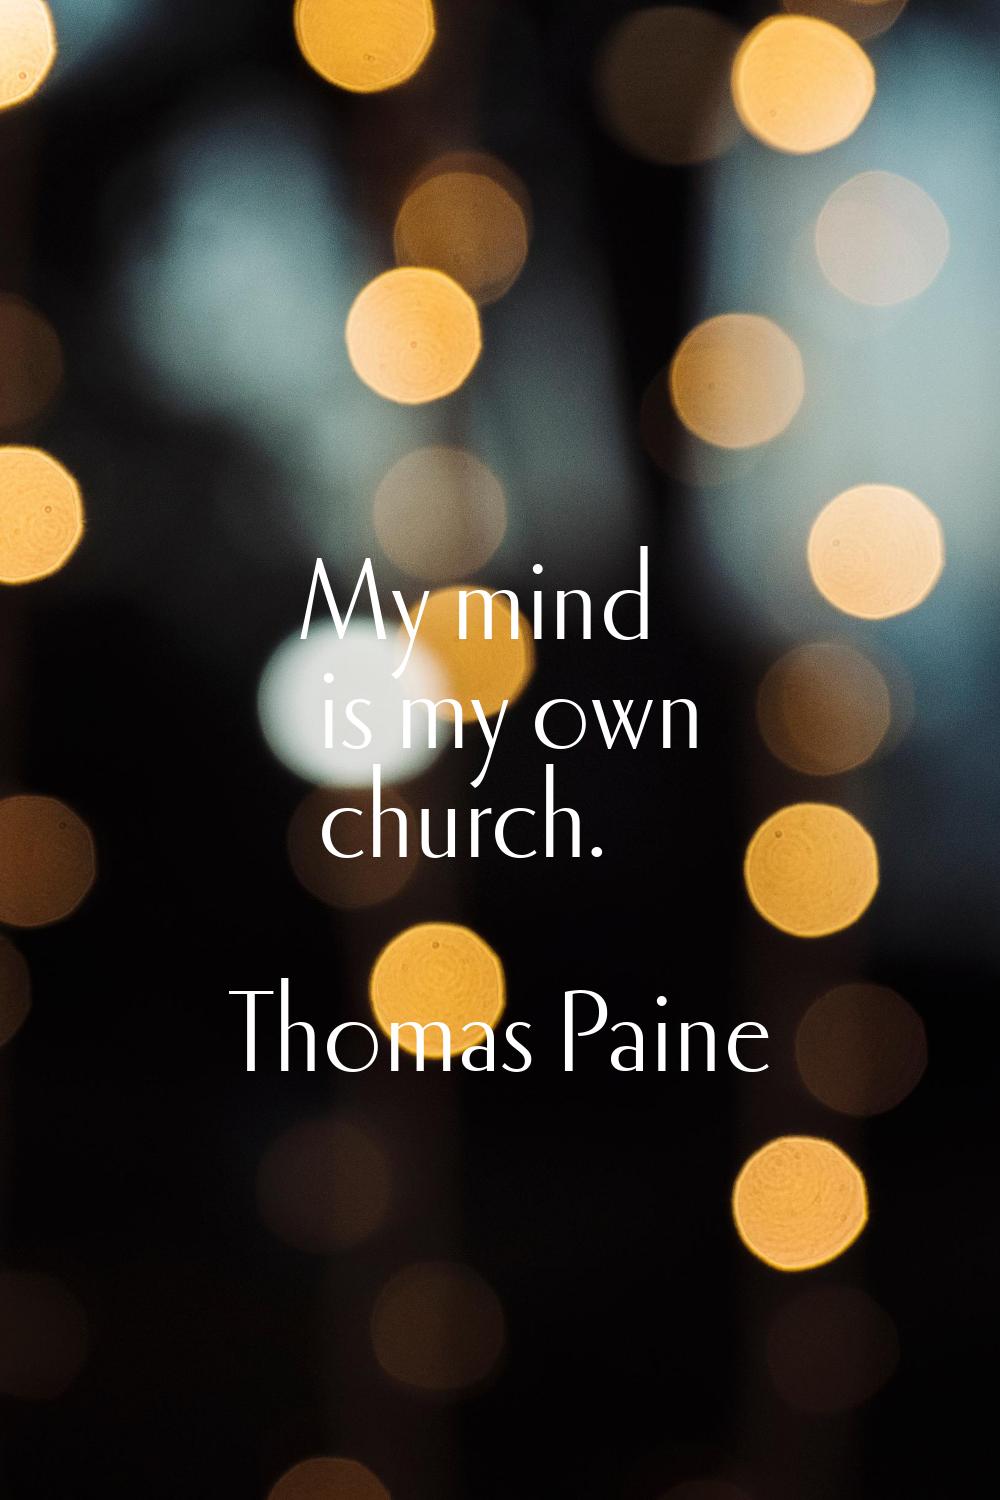 My mind is my own church.